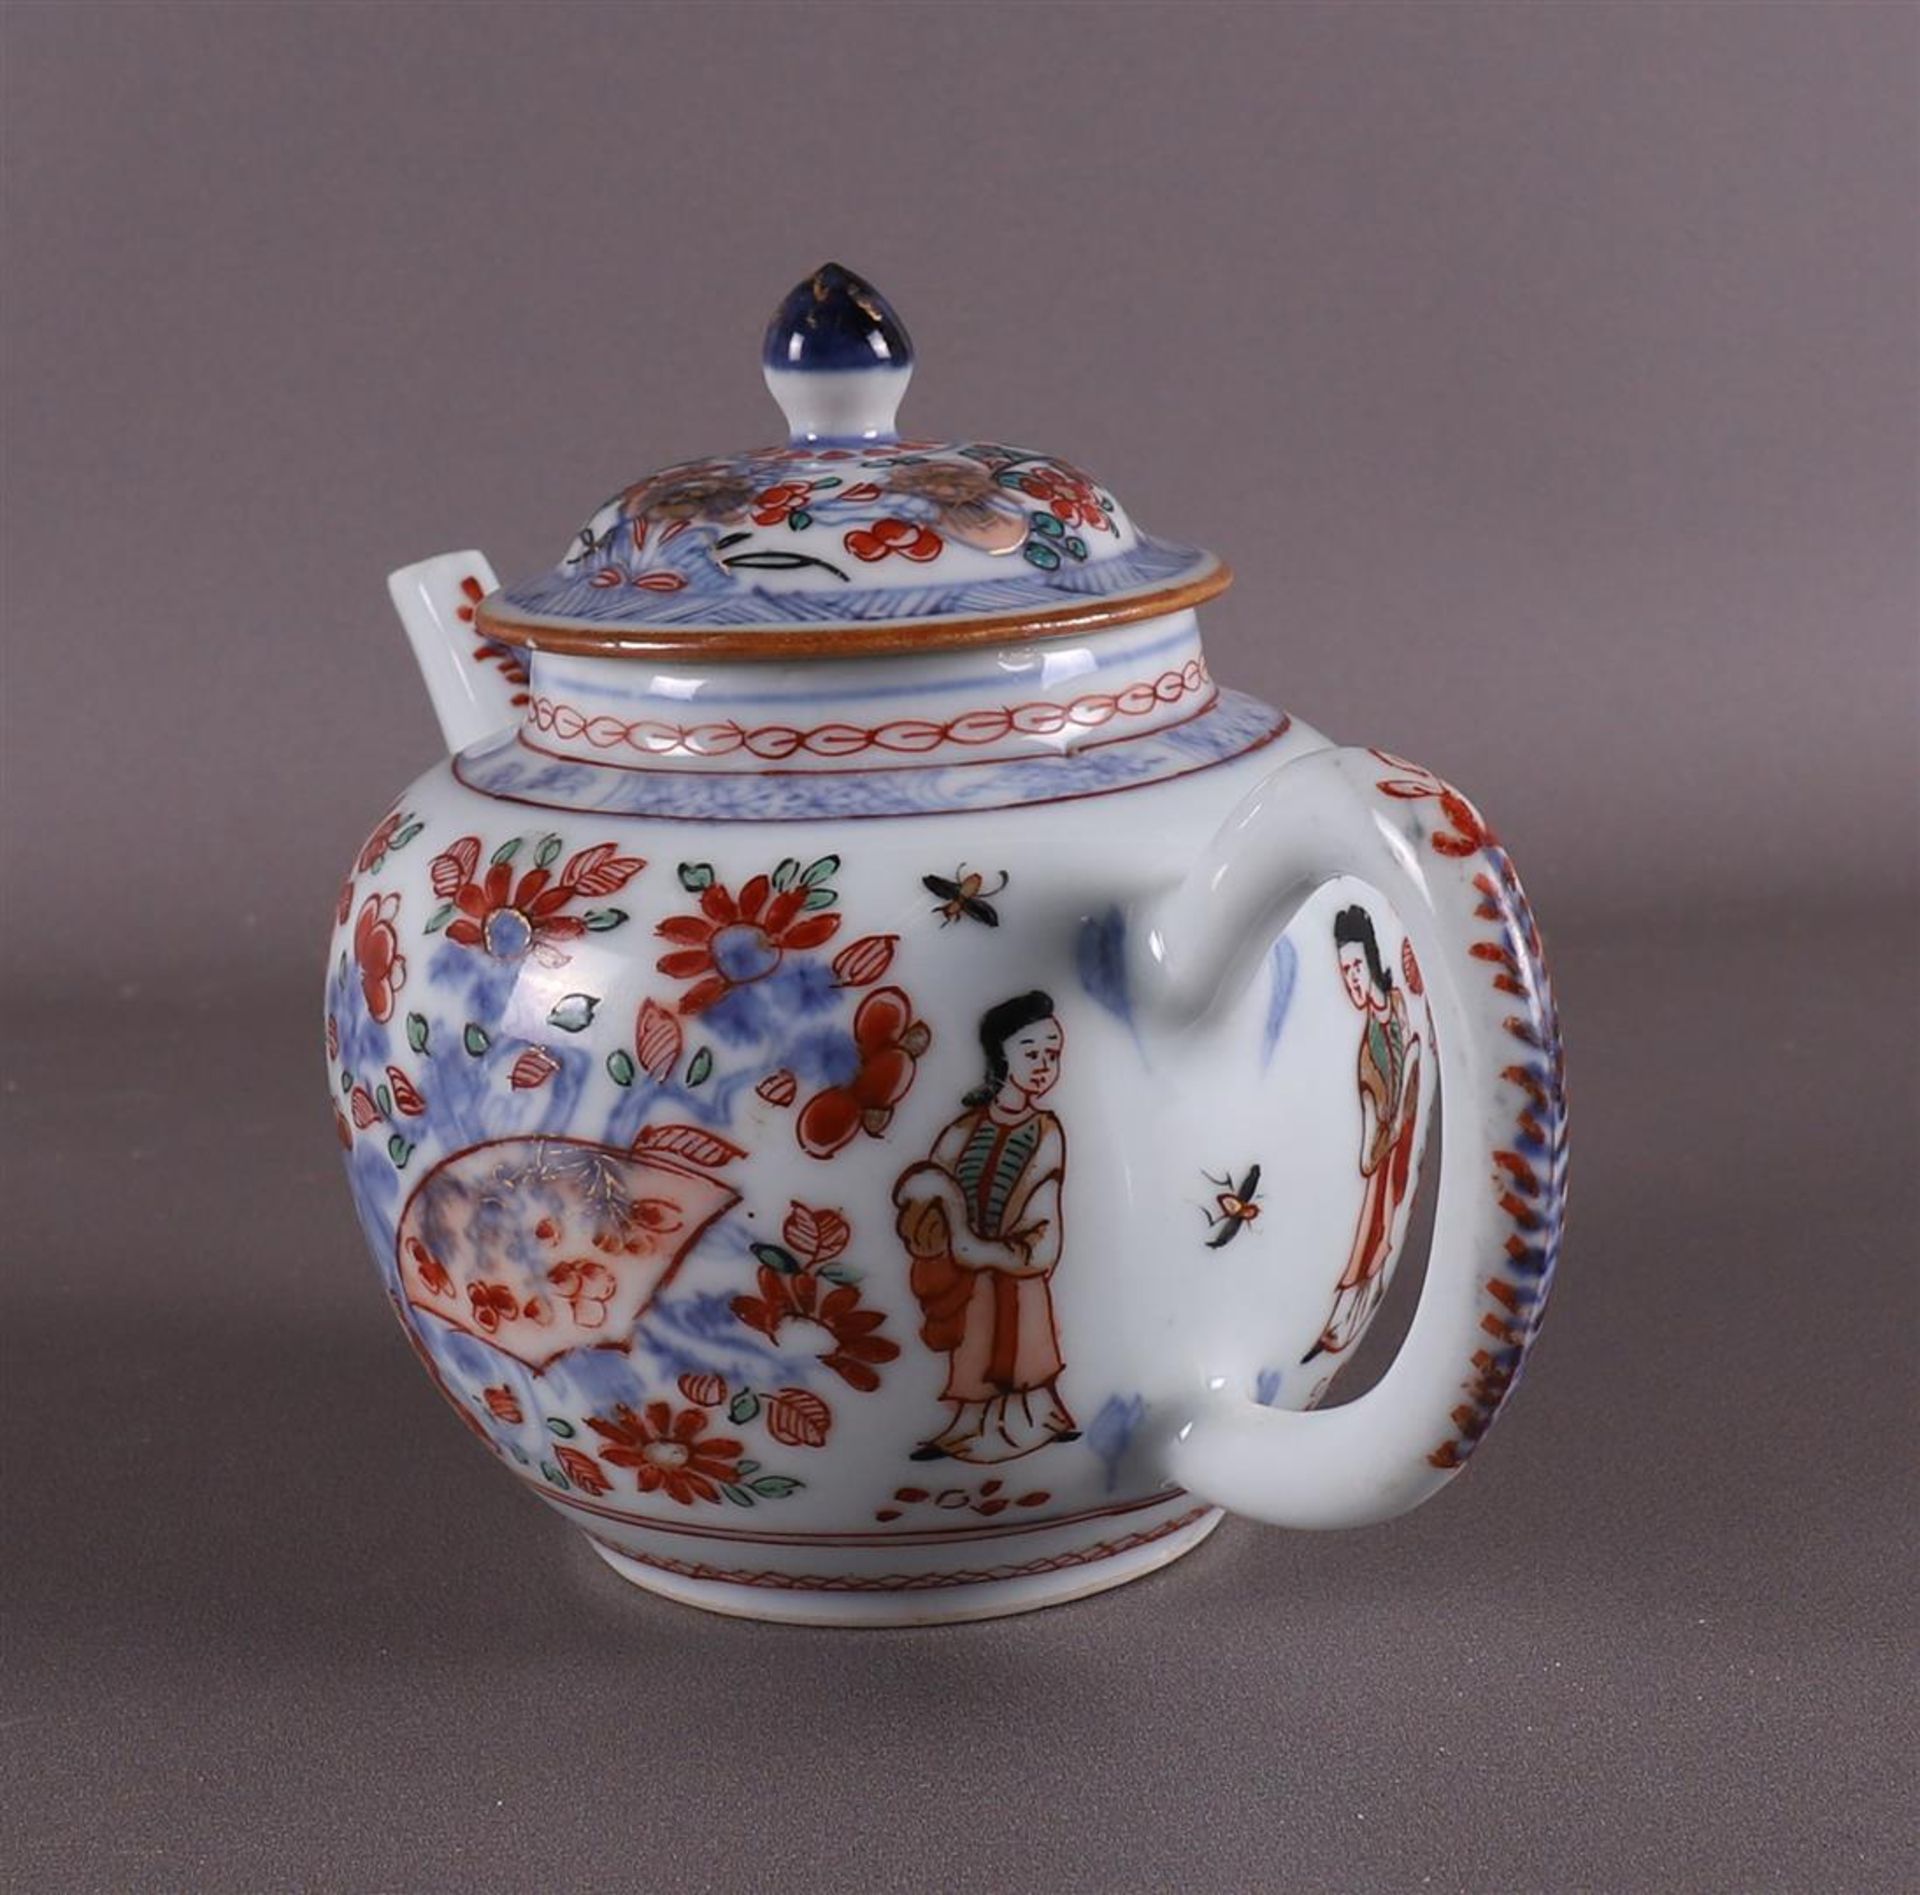 A spherical porcelain Amsterdam variegated teapot, China, 18th century. Polychrome decoration of a - Bild 7 aus 13